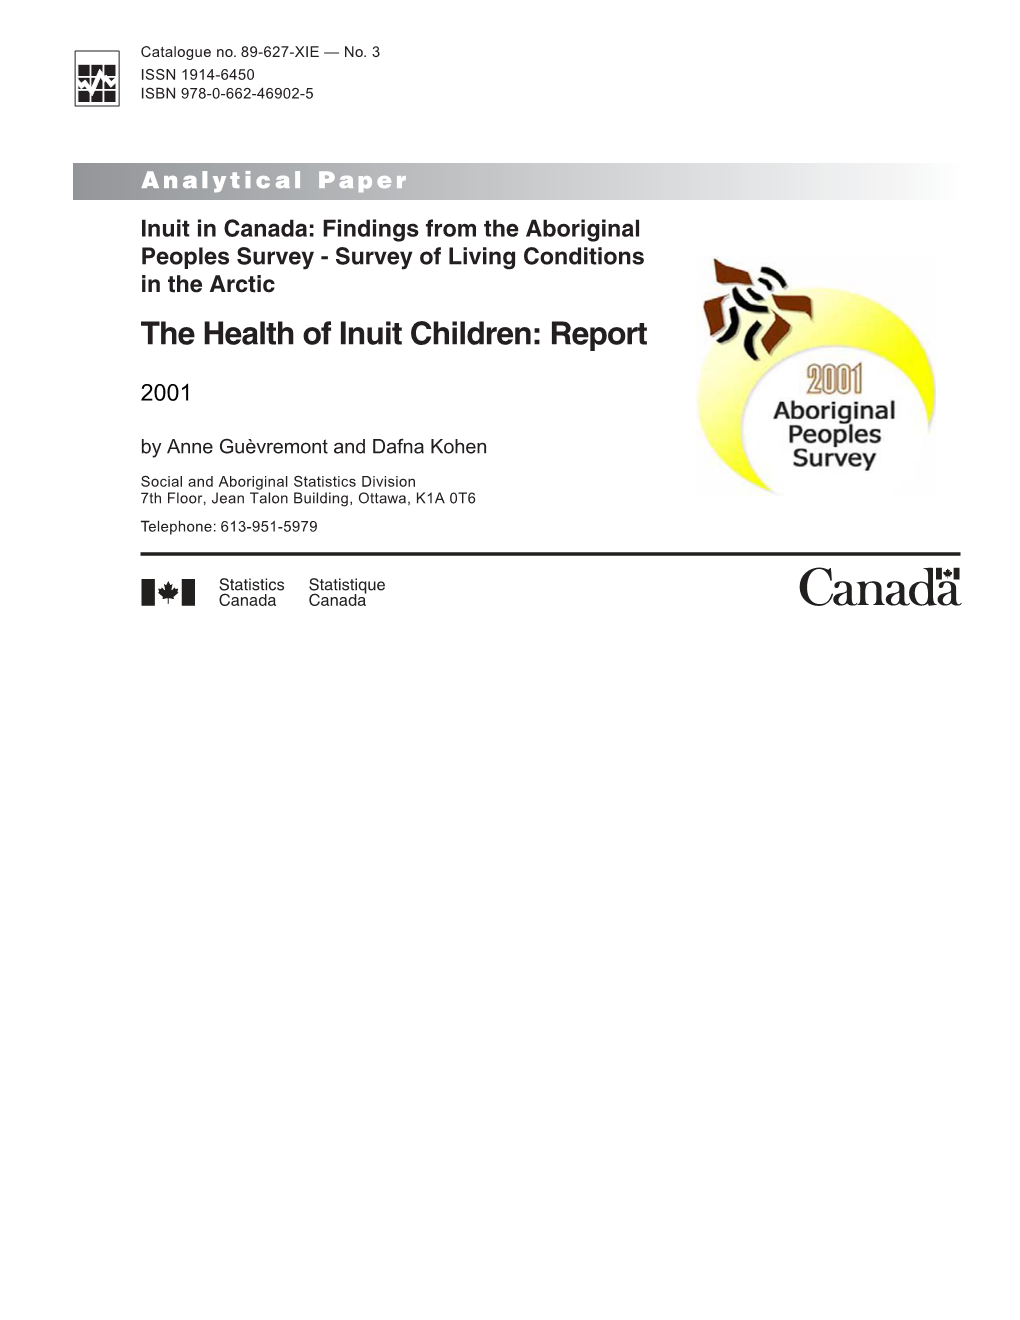 The Health of Inuit Children: Report